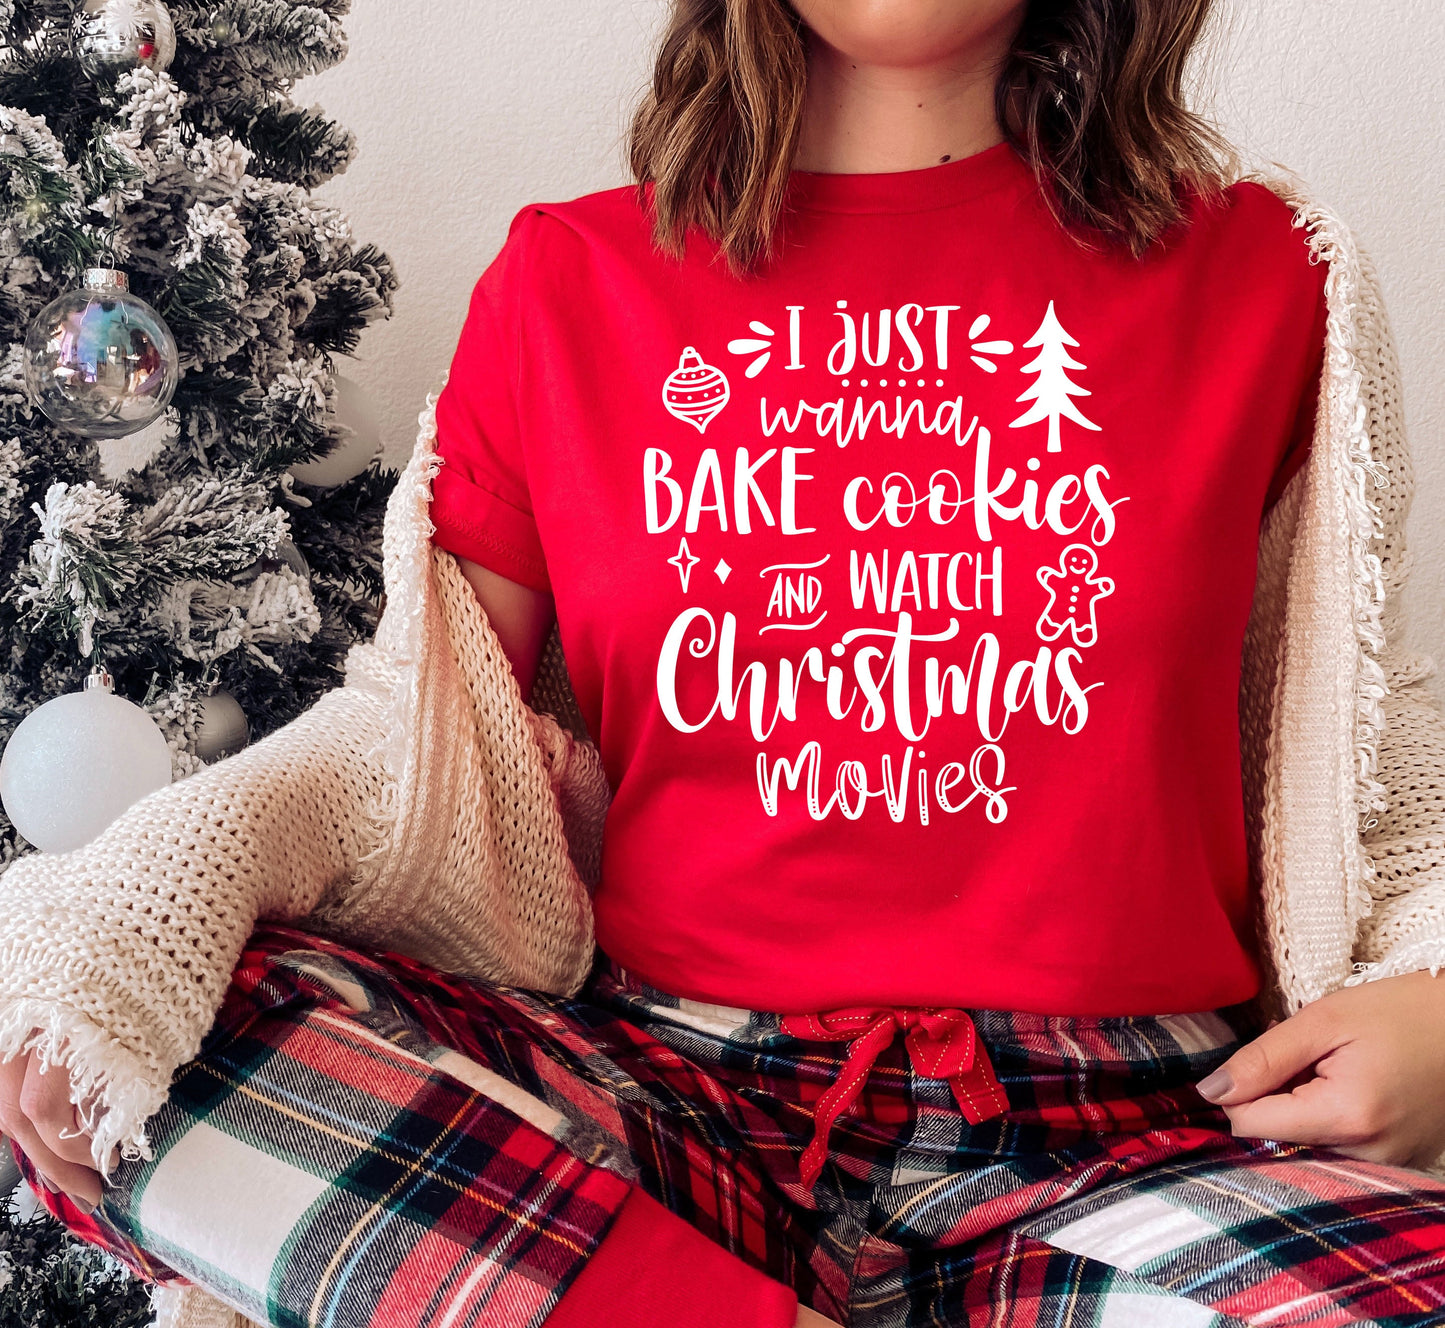 Cookies & Christmas Movies - Alonna's Legging Land